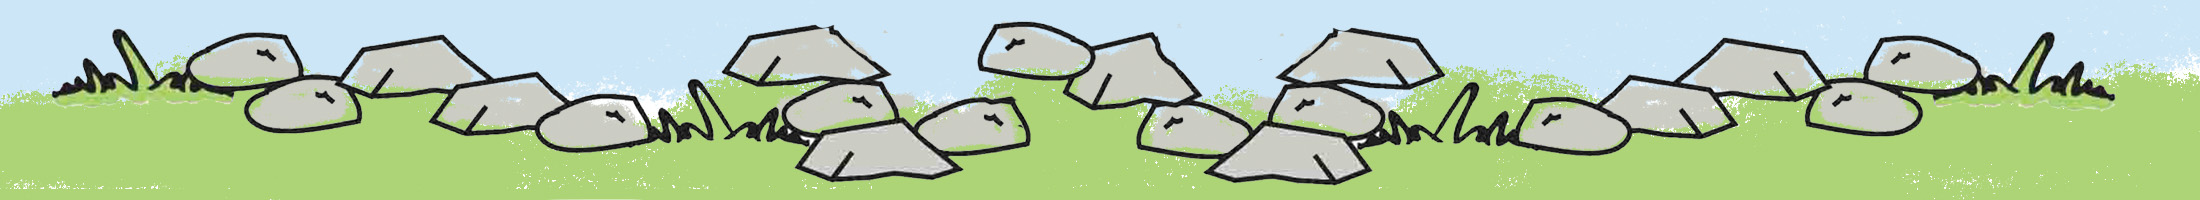 Illustration of rocks and grass